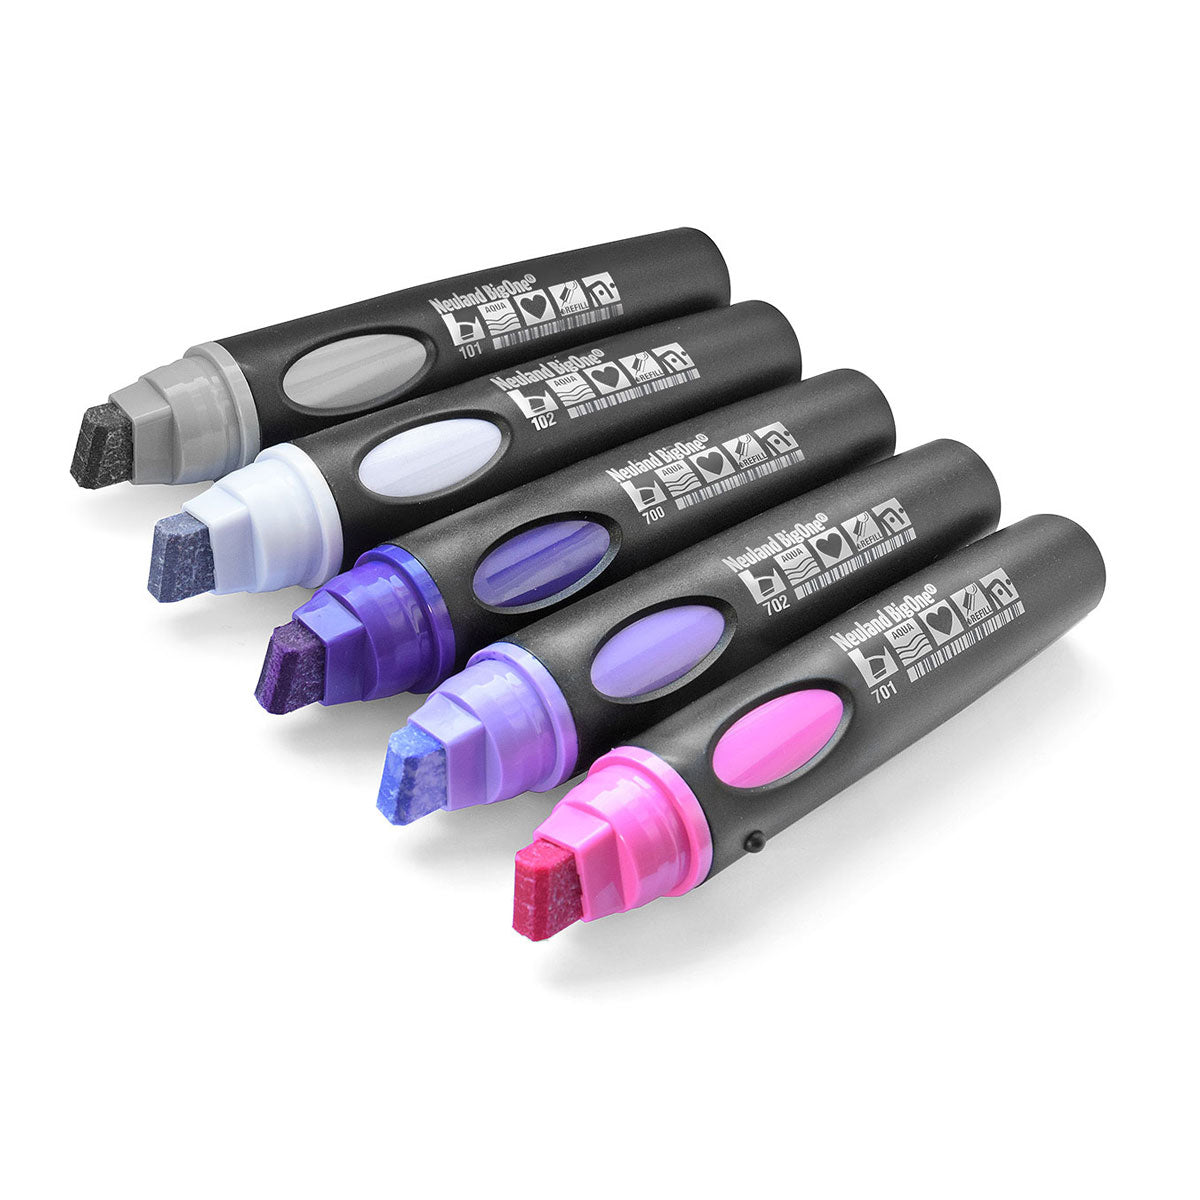 Neuland BigOne®, Keilspitze 6-12 mm, 5er Farbsets- set no. 18 pink amethyst